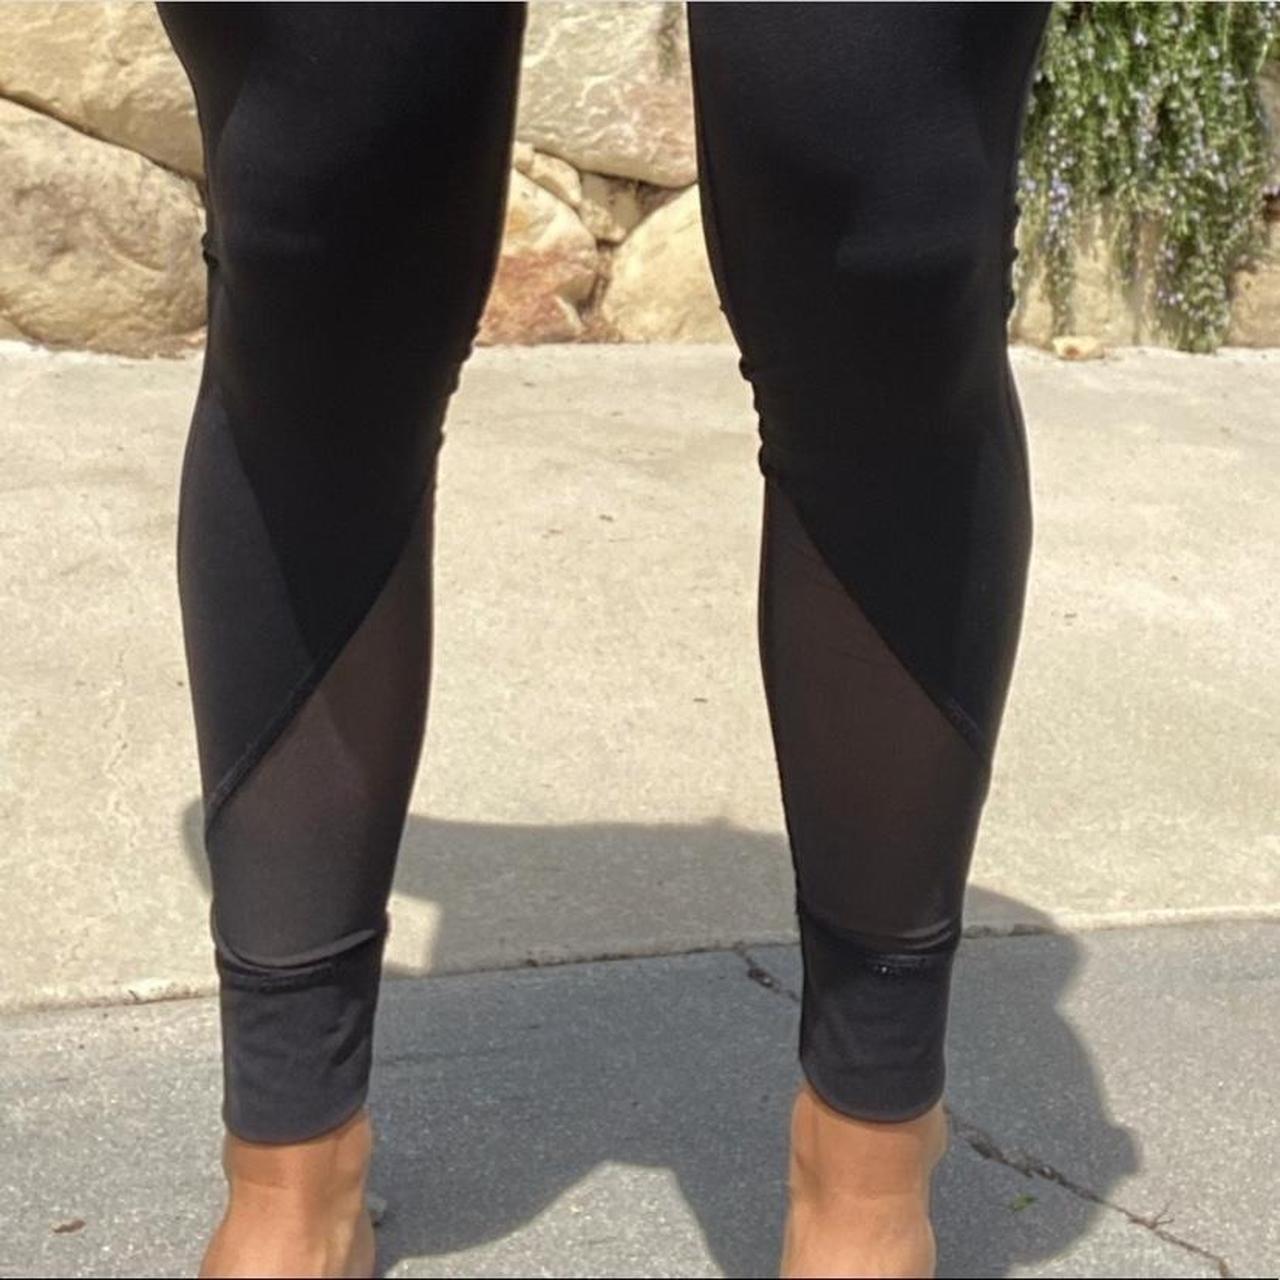 Lululemon Black Leggings with Lace Calf Size 6